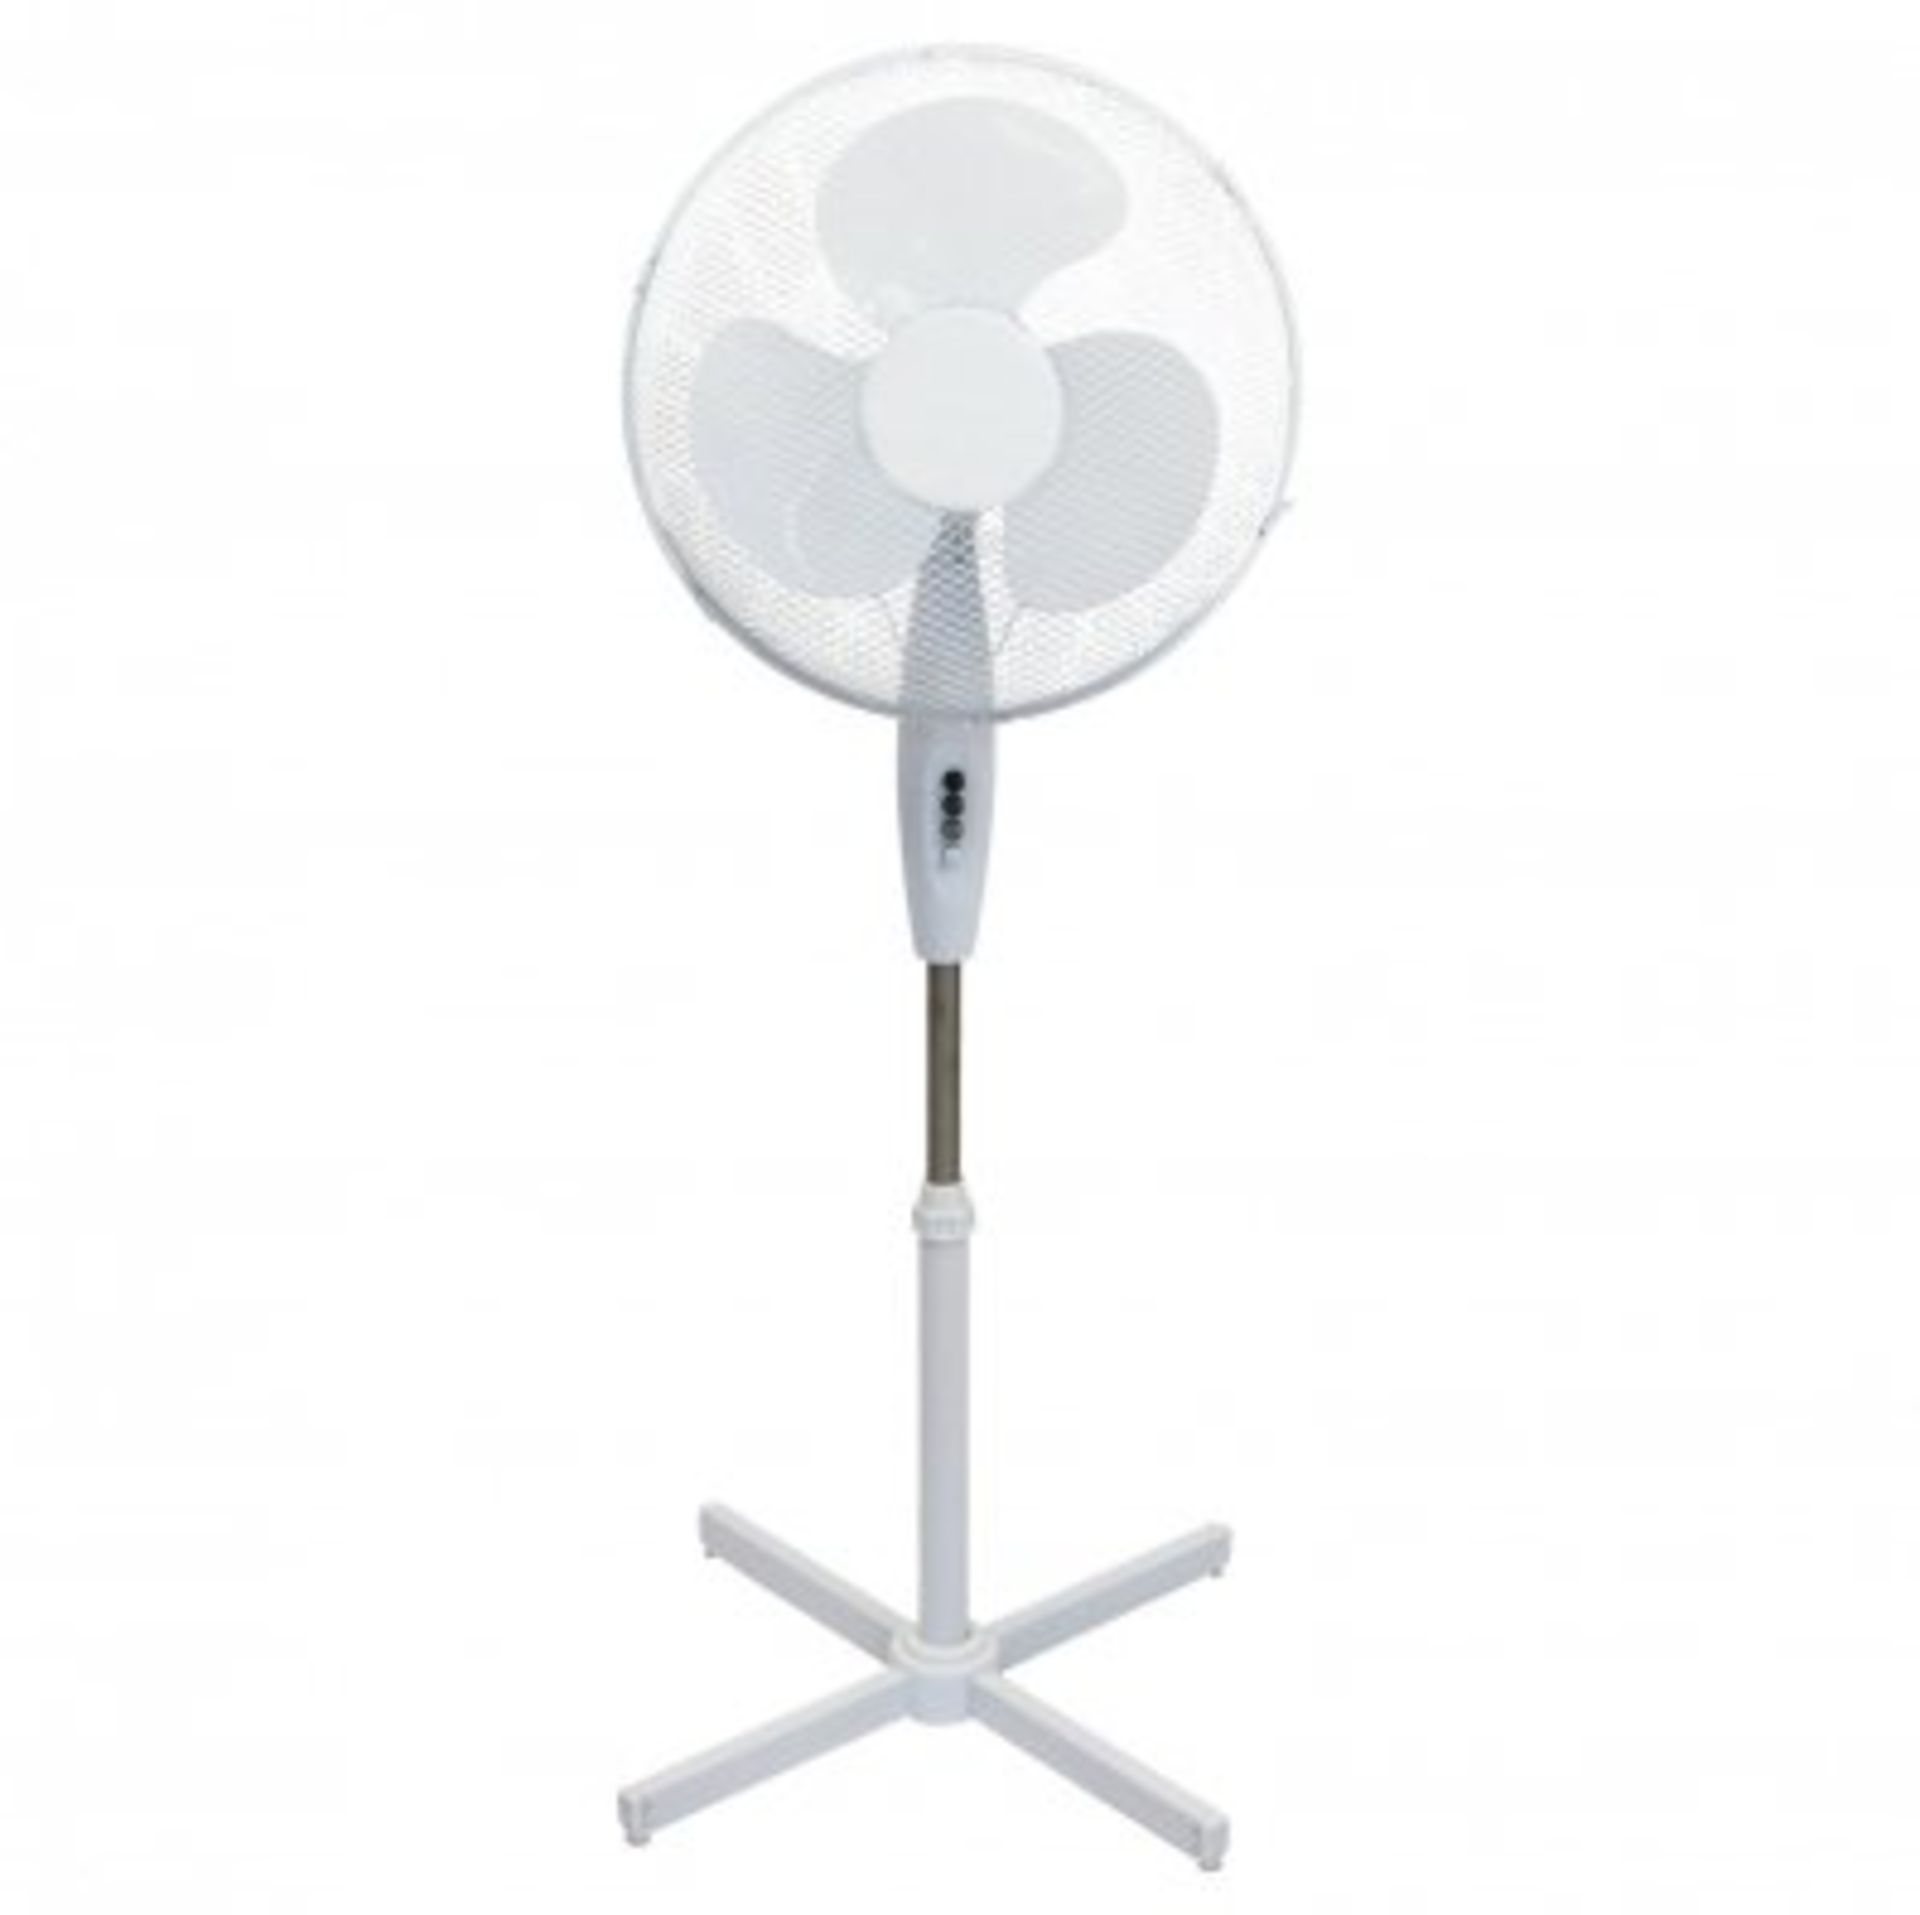 (RU343) 16" Oscillating Pedestal Electric Fan The fan head oscillates and tilts wh...